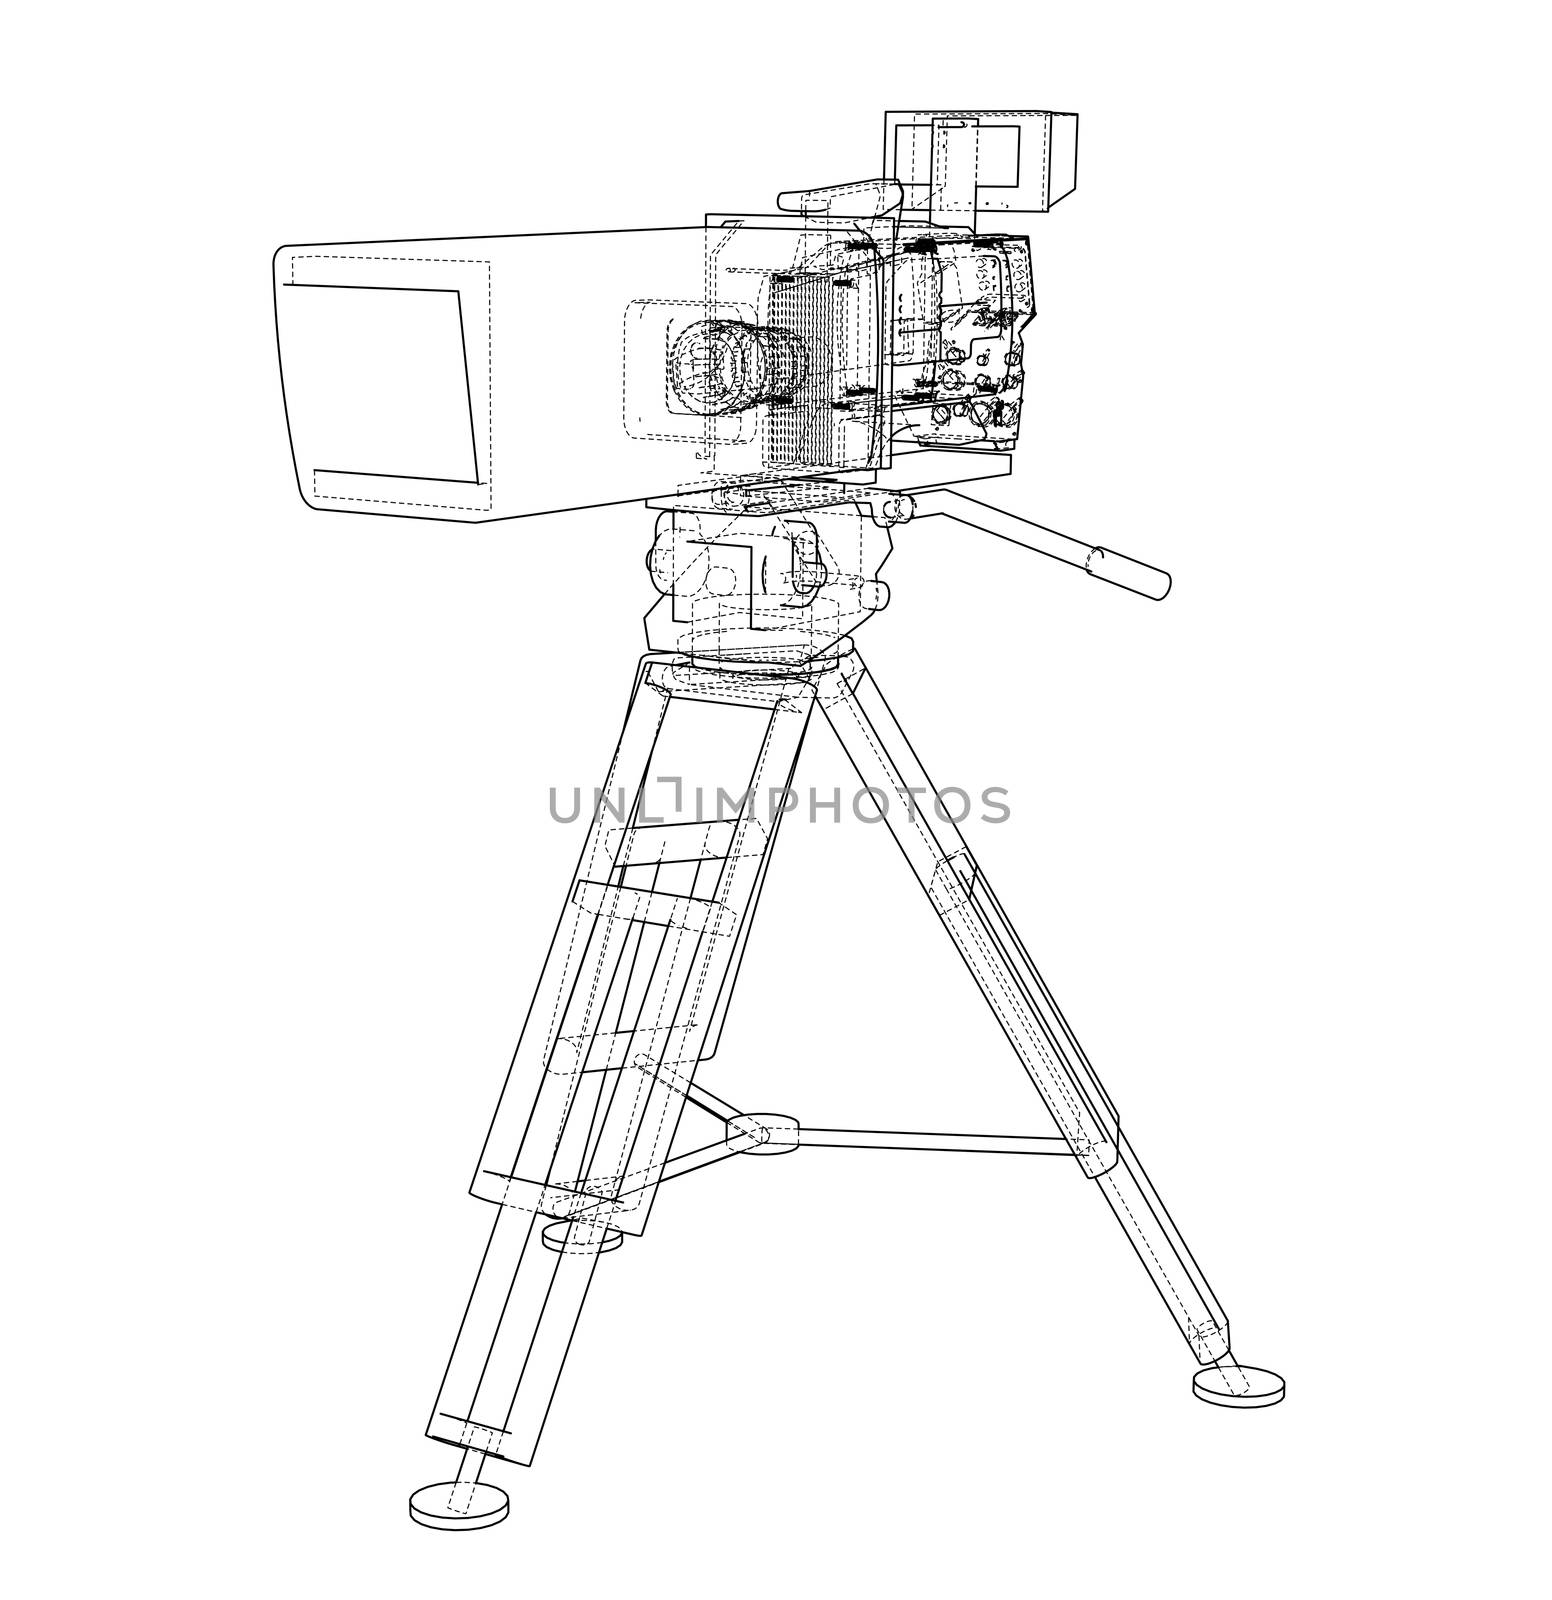 Movie-cinema camera concept. Wire-frame style. 3d illustration